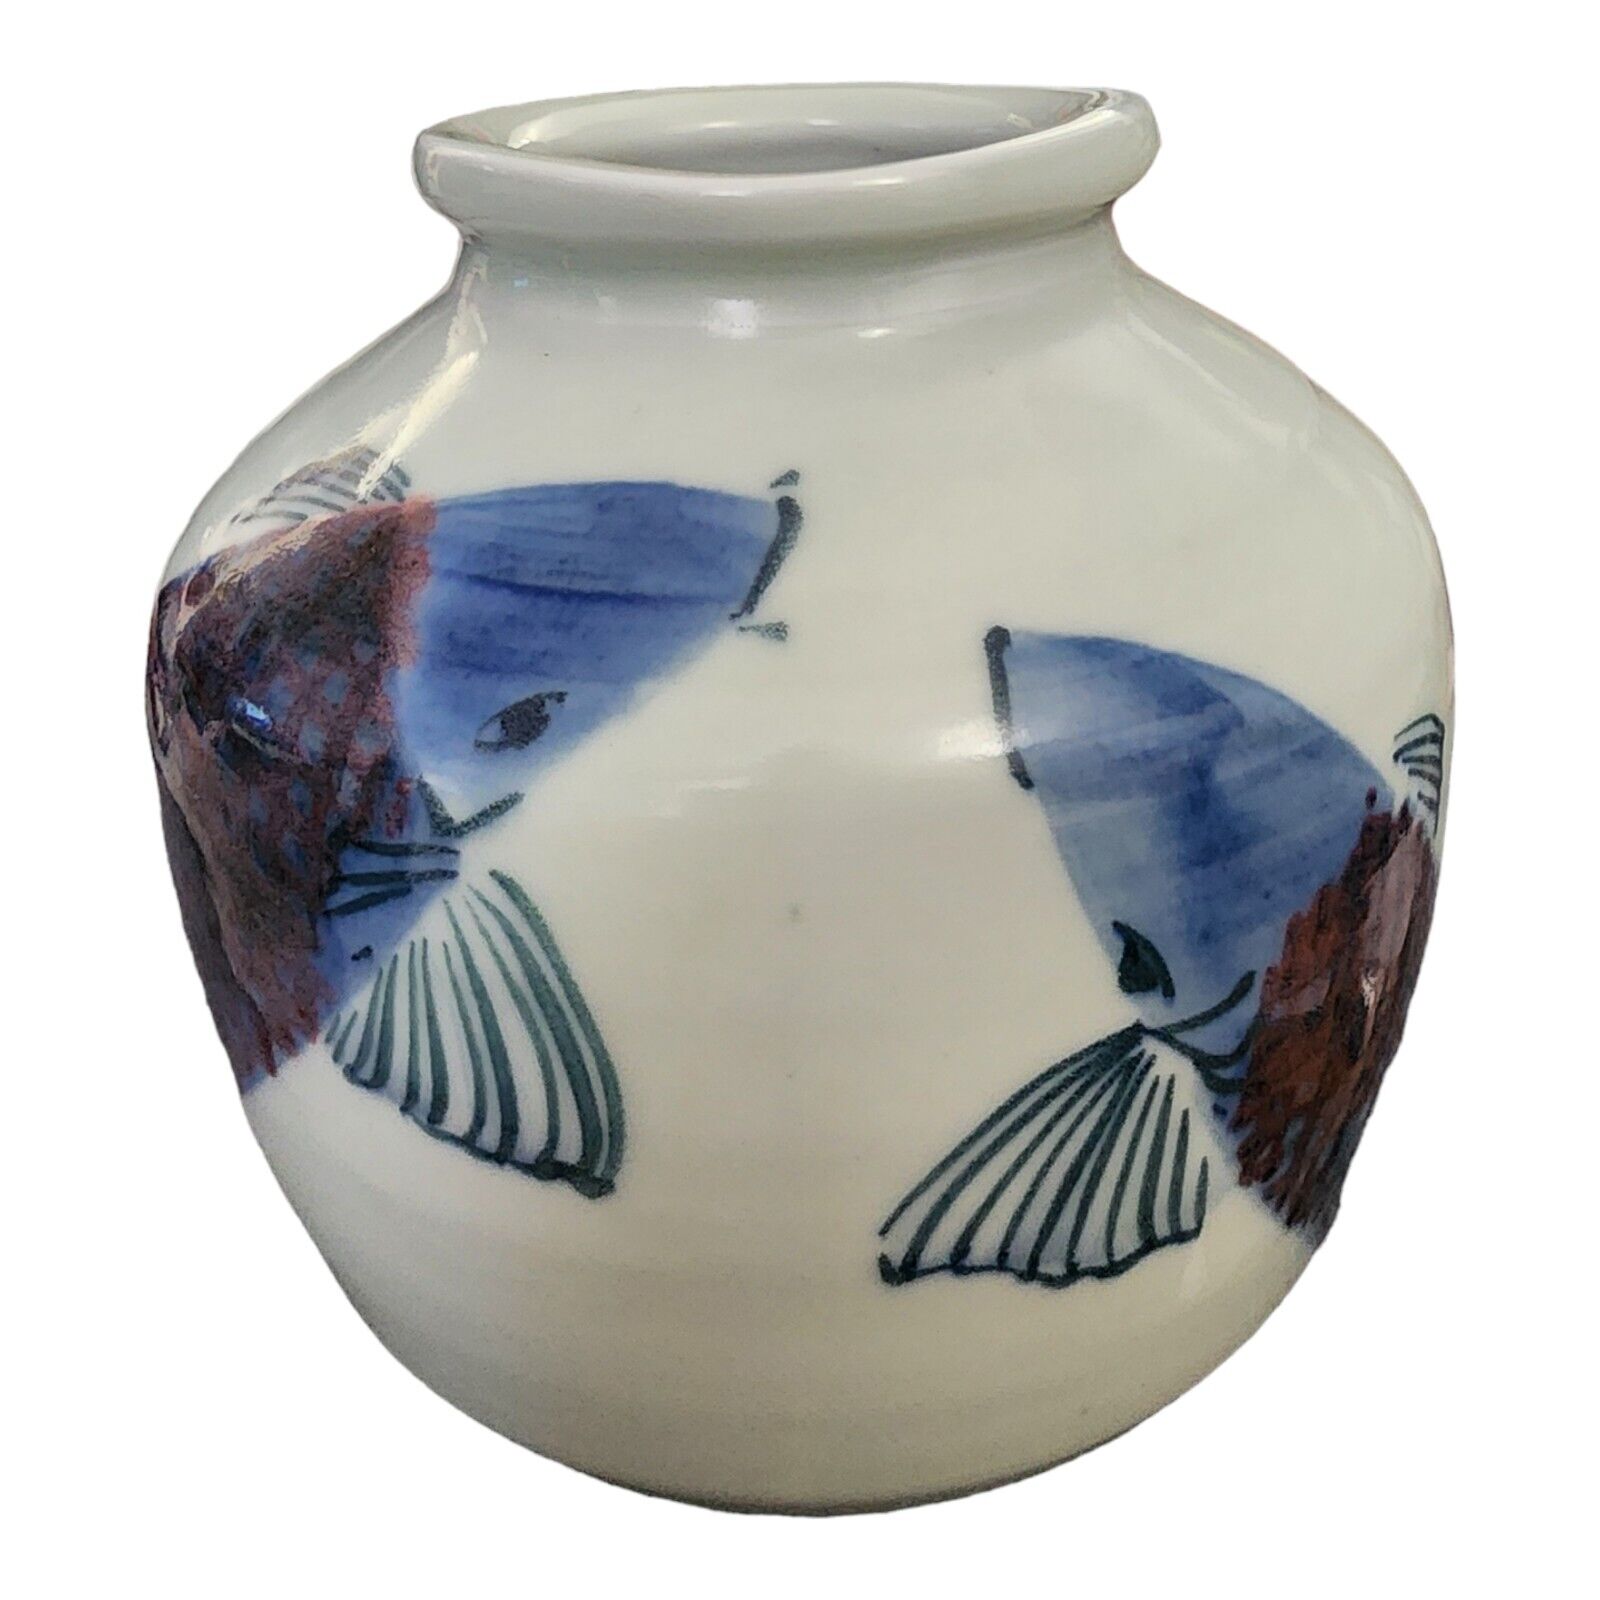 Studio Pottery Ceramic Vase Signed Mikkelsen and Pope With Blue Koi Fish Pattern